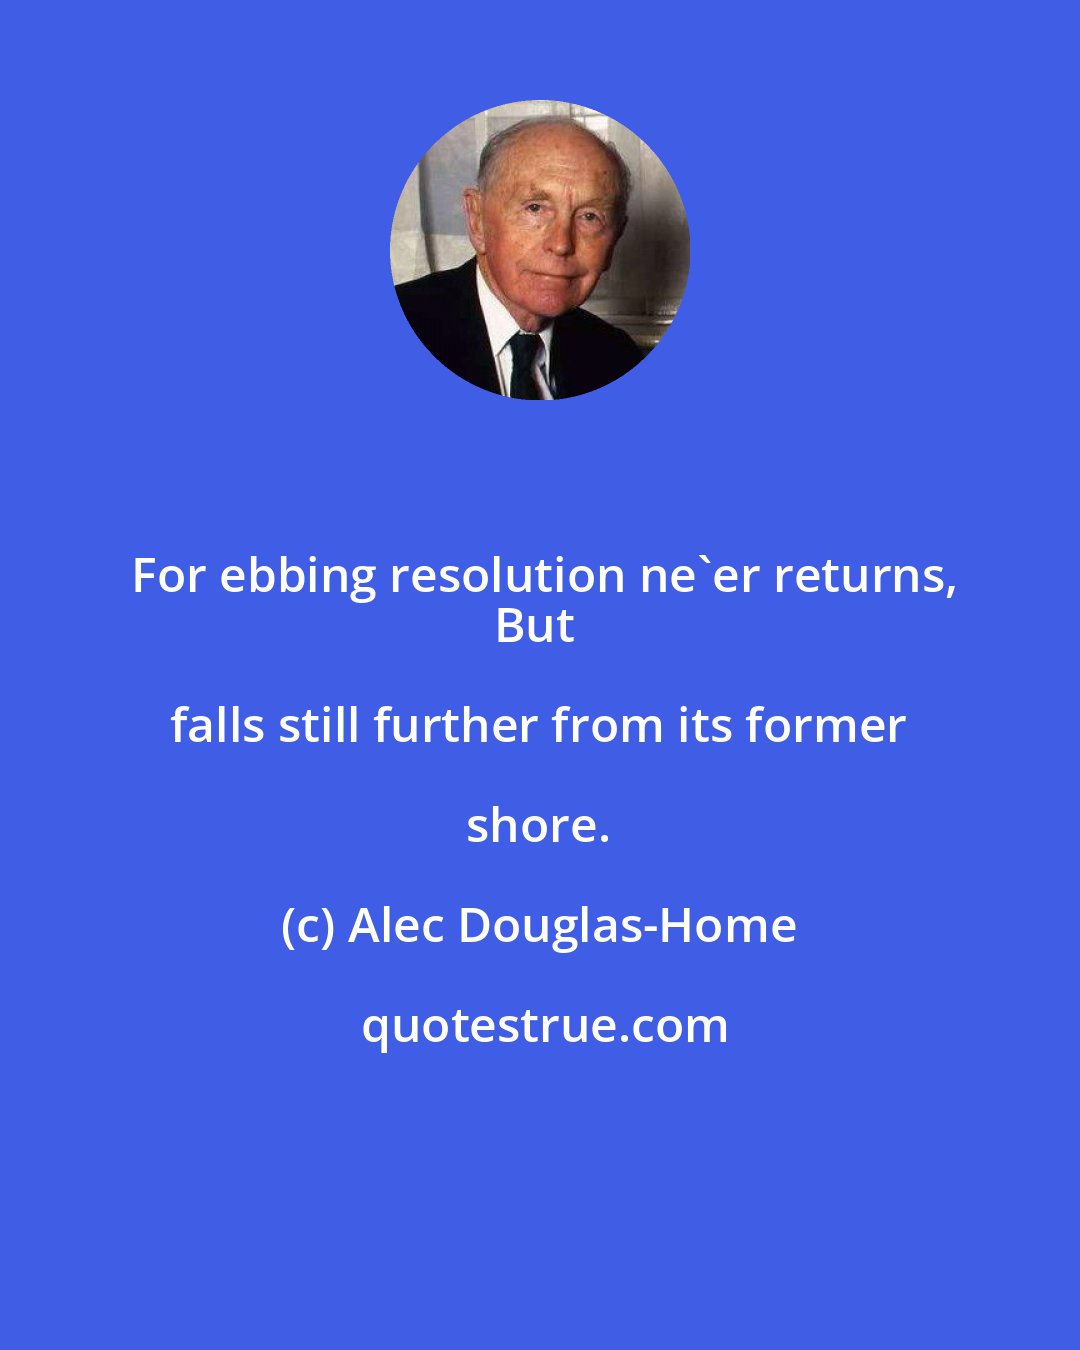 Alec Douglas-Home: For ebbing resolution ne'er returns,
But falls still further from its former shore.